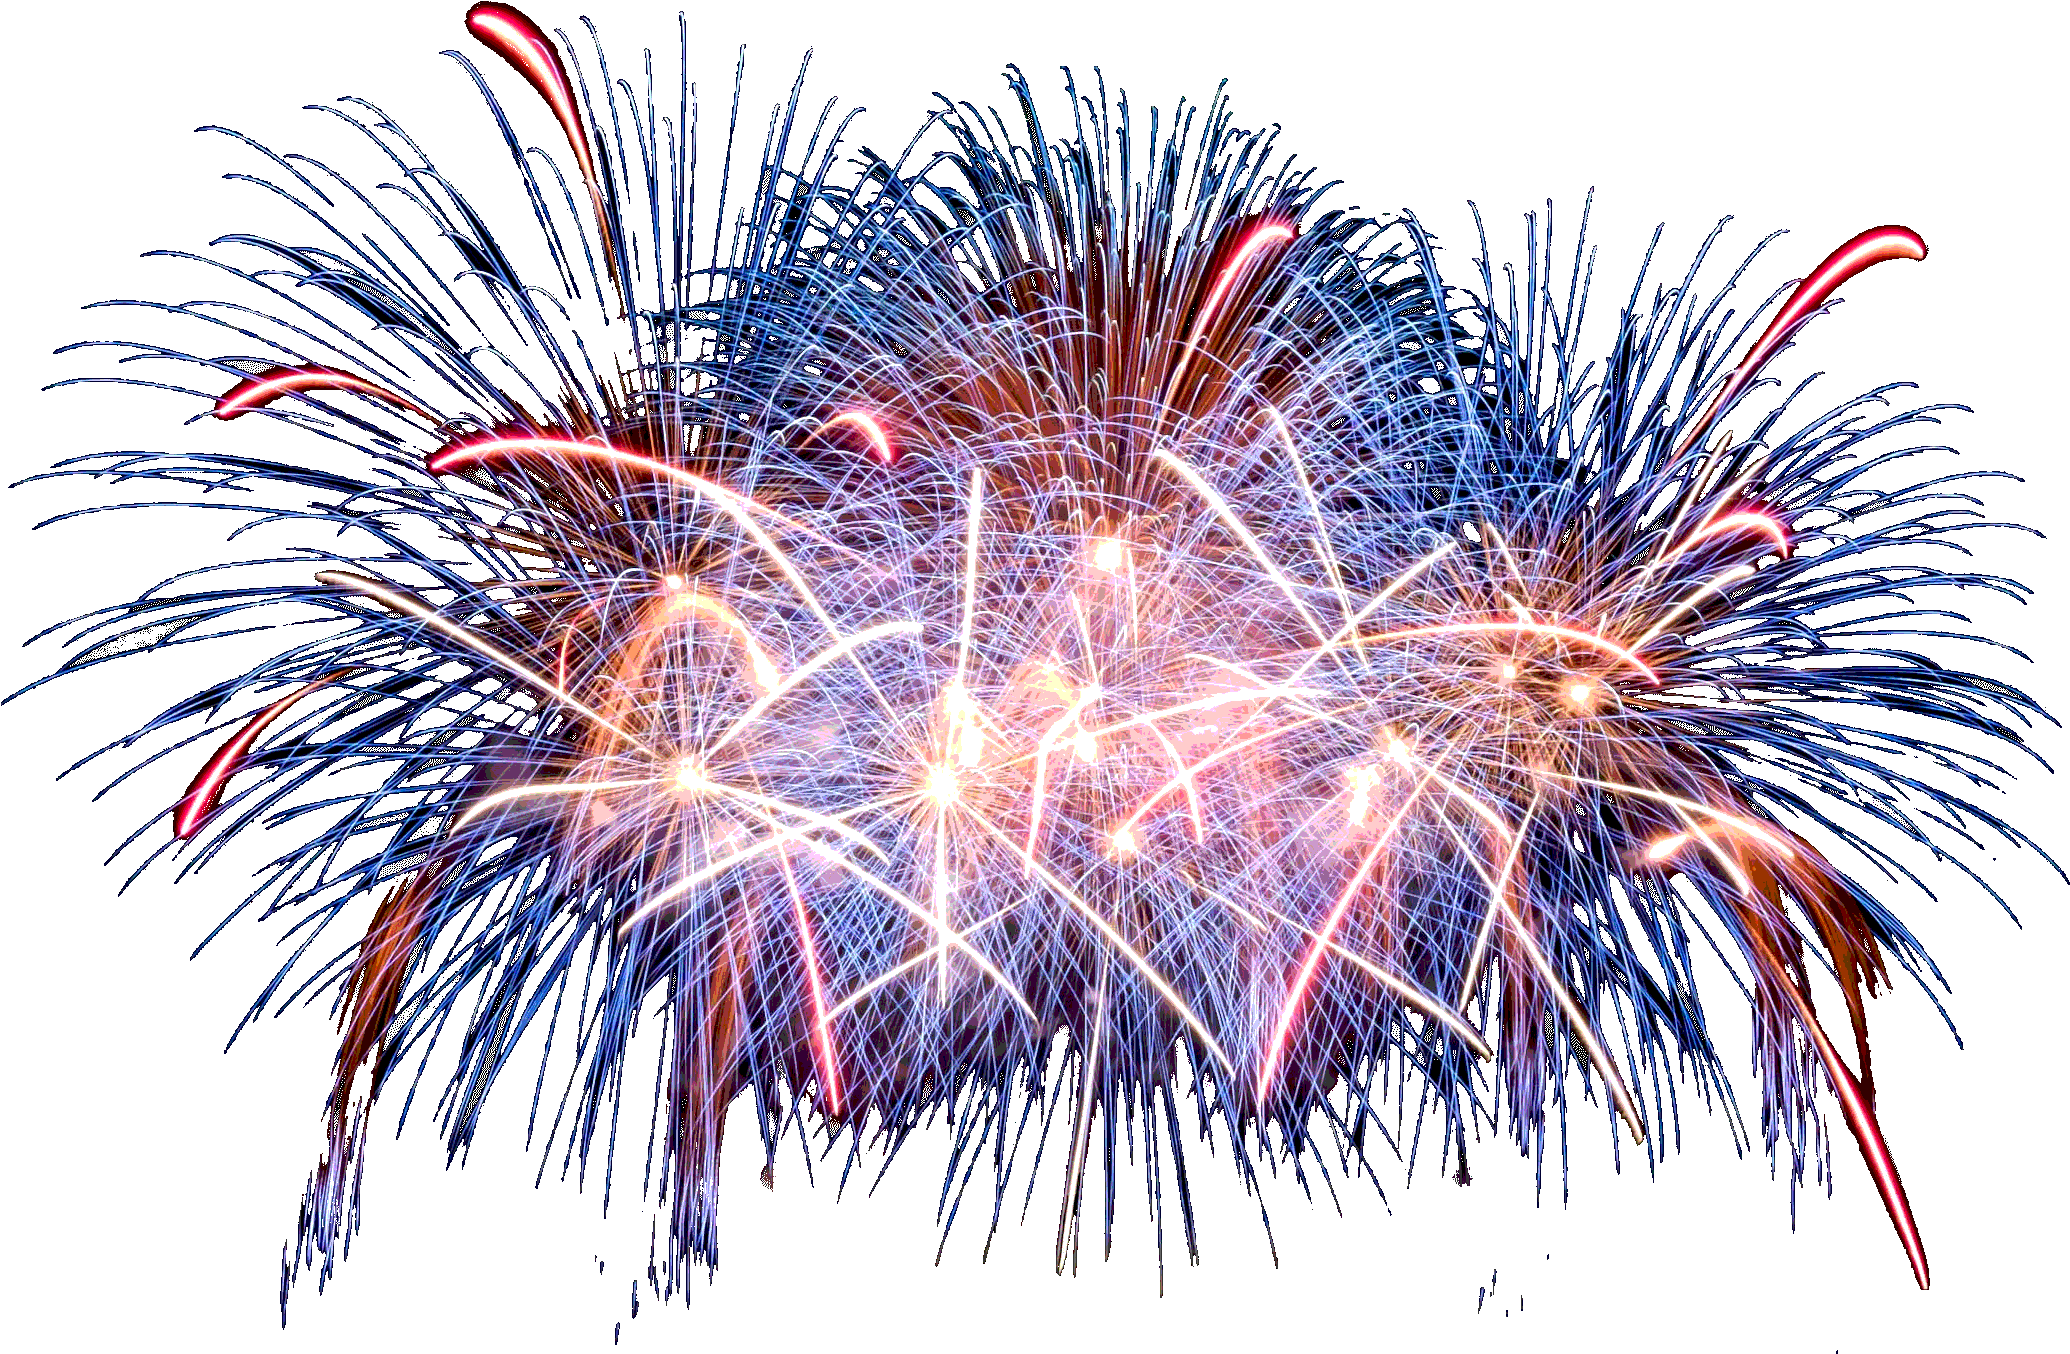 Vibrant Fireworks Display